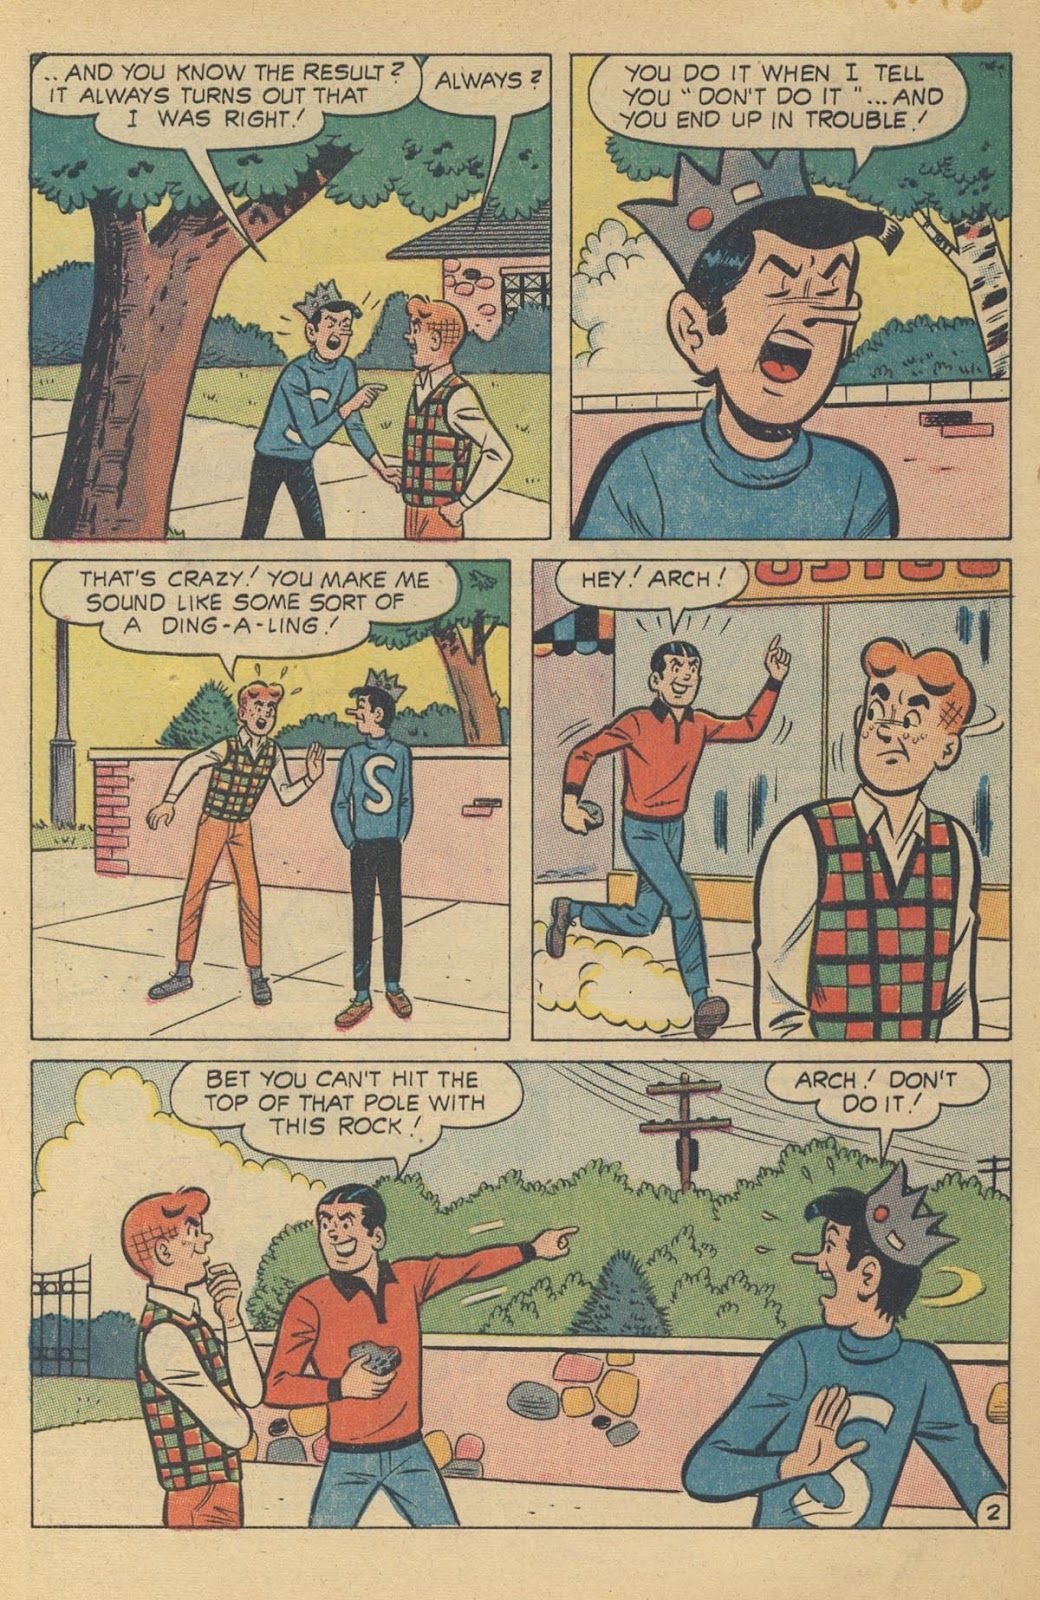 Jughead keeps warning Archie